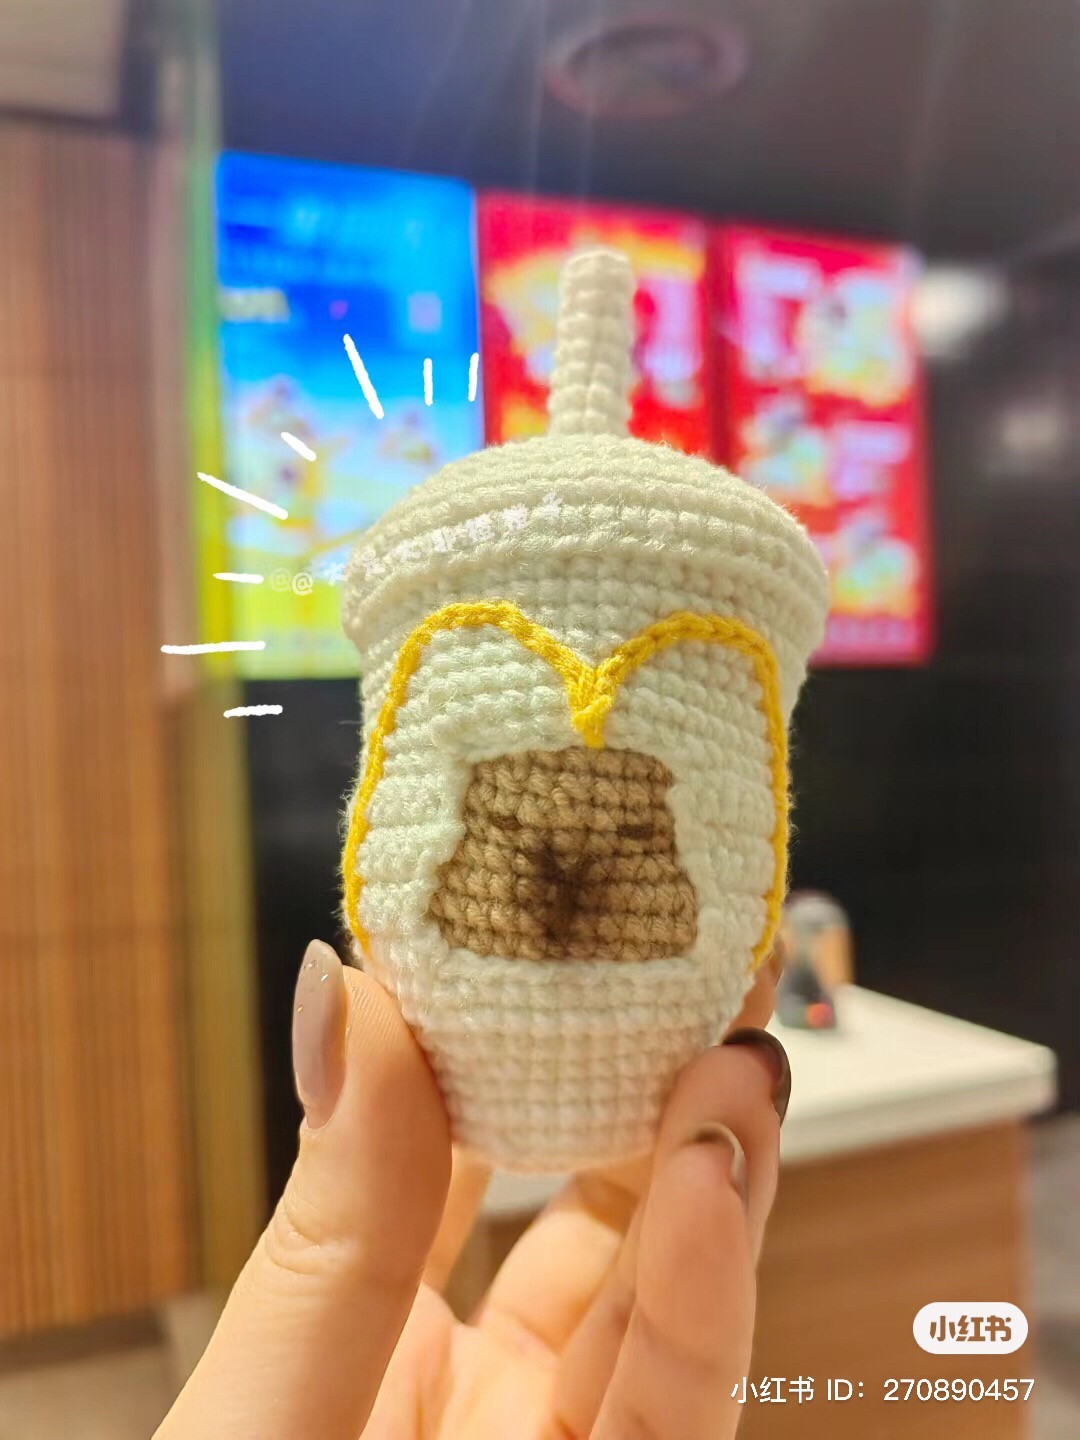 Capybara crochet pattern for milk tea, potato chips...